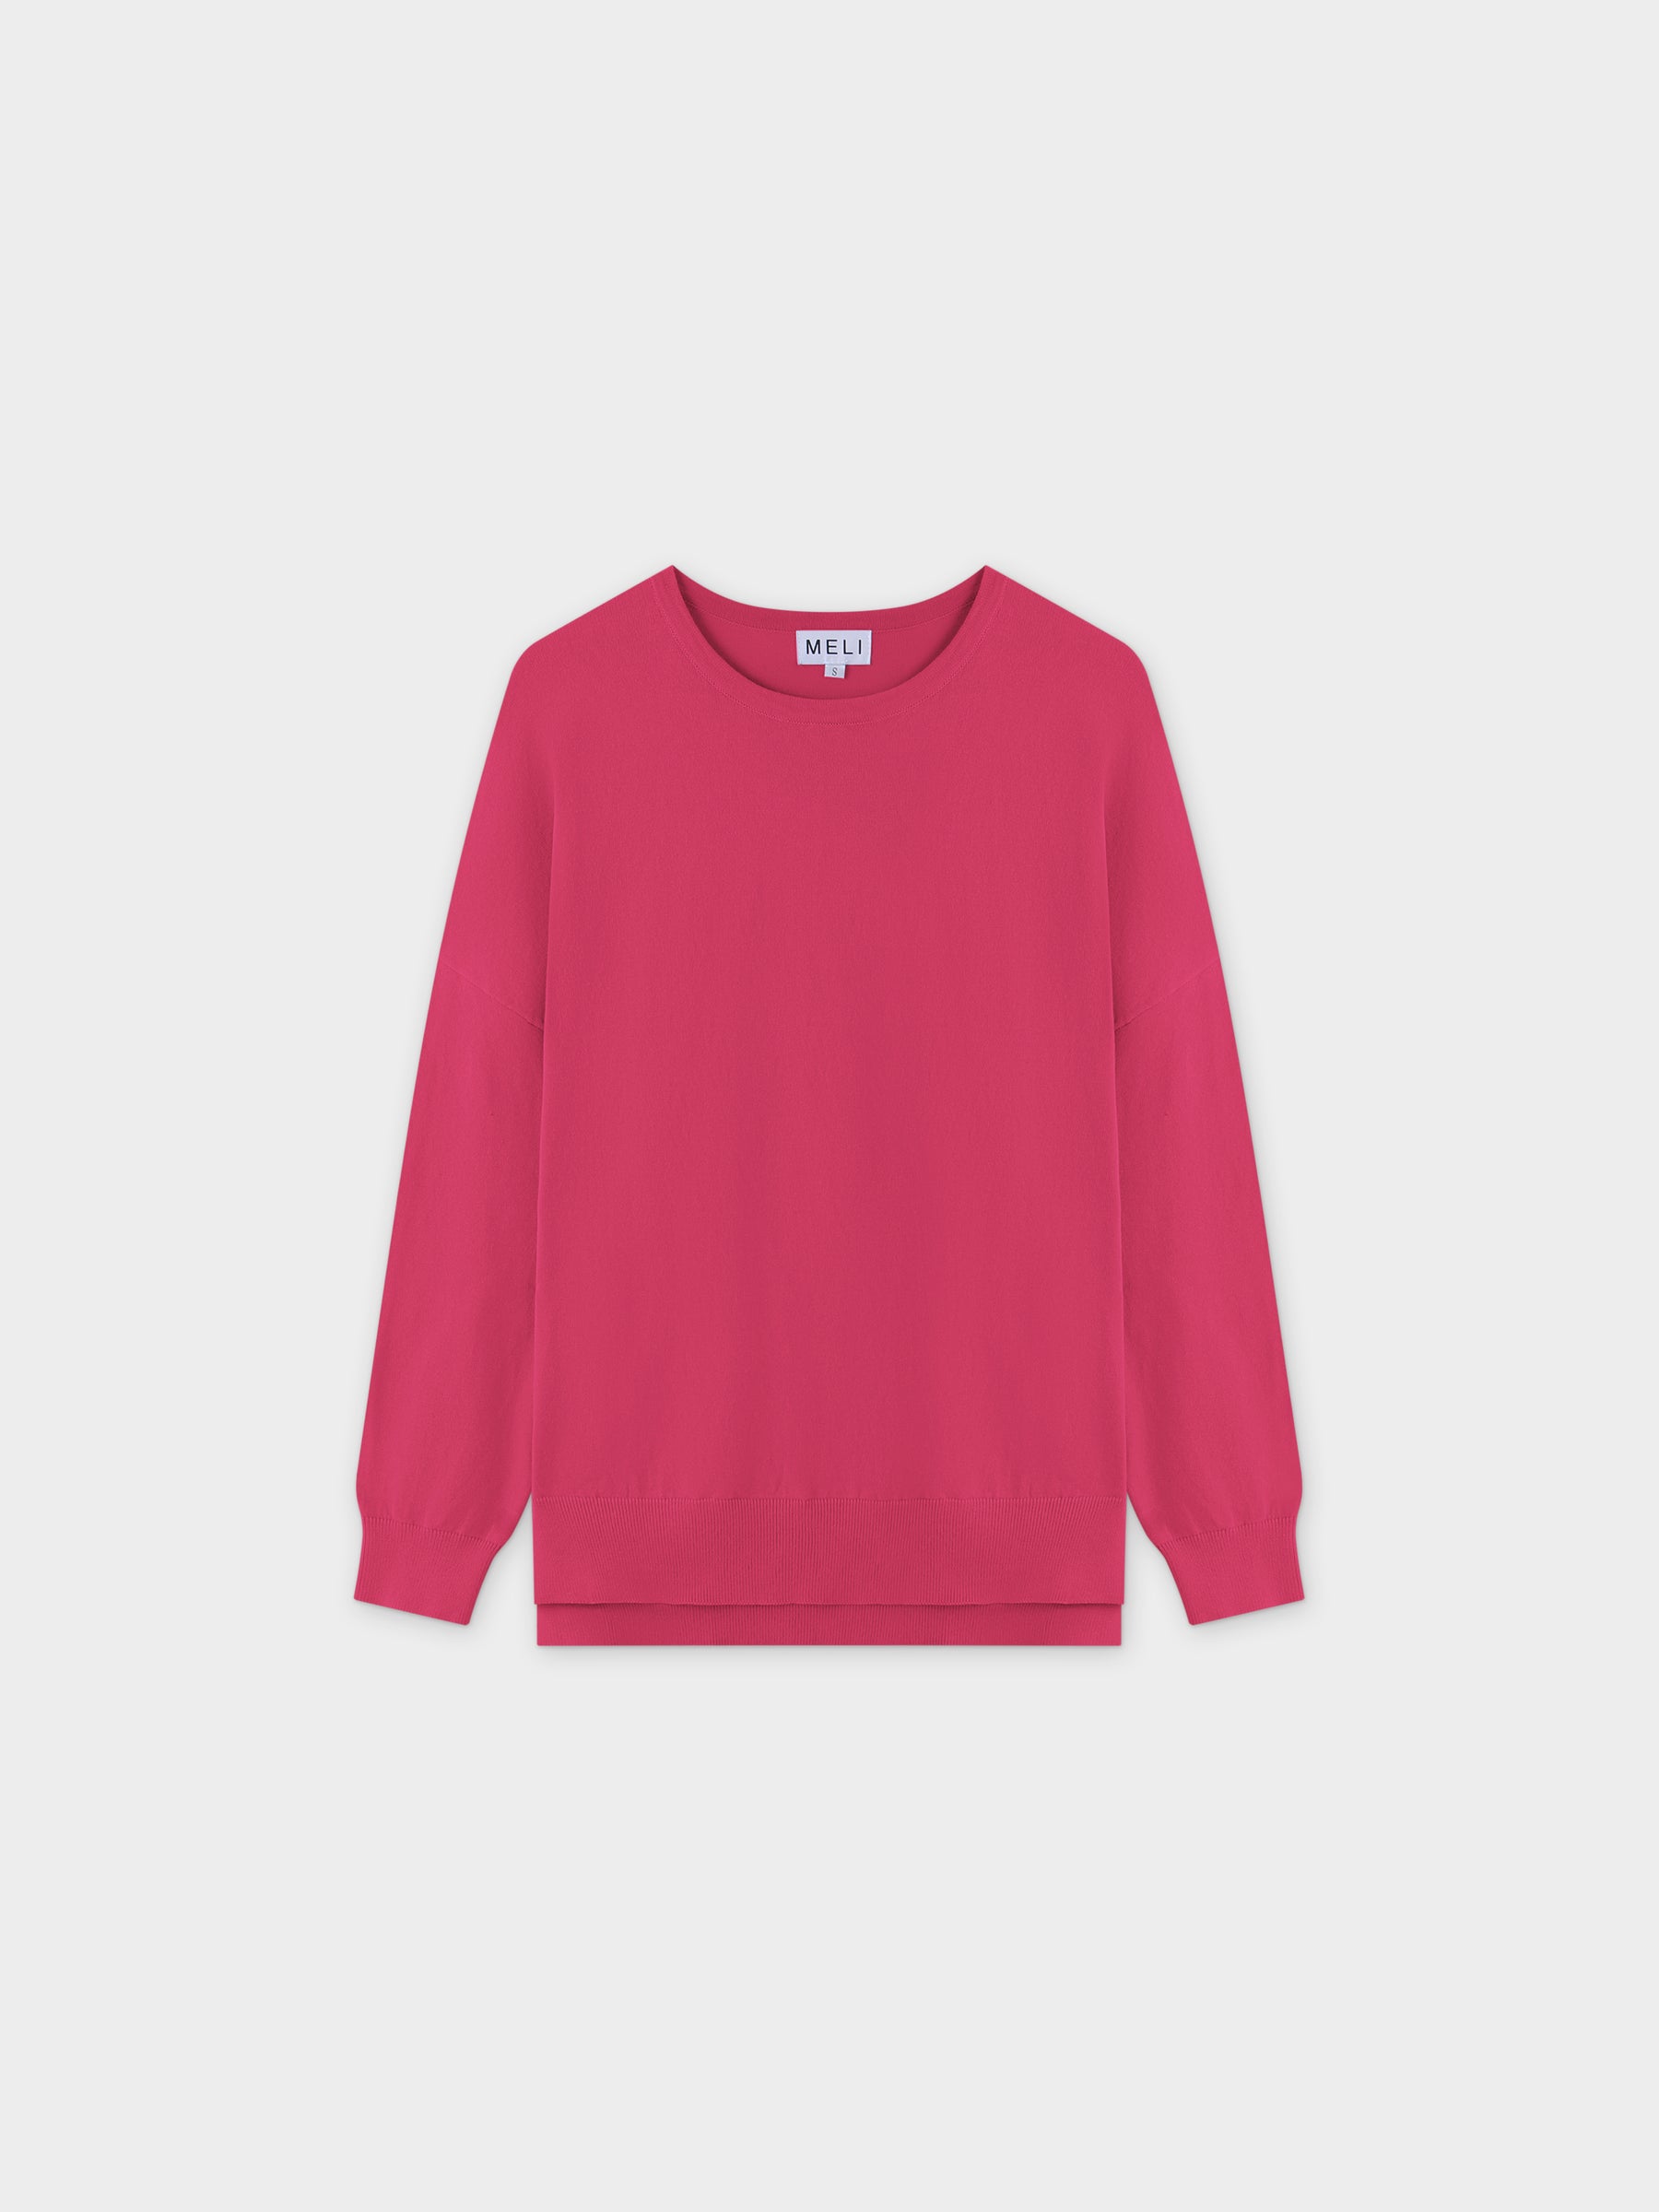 Oversized Lightweight Sweater-Pink